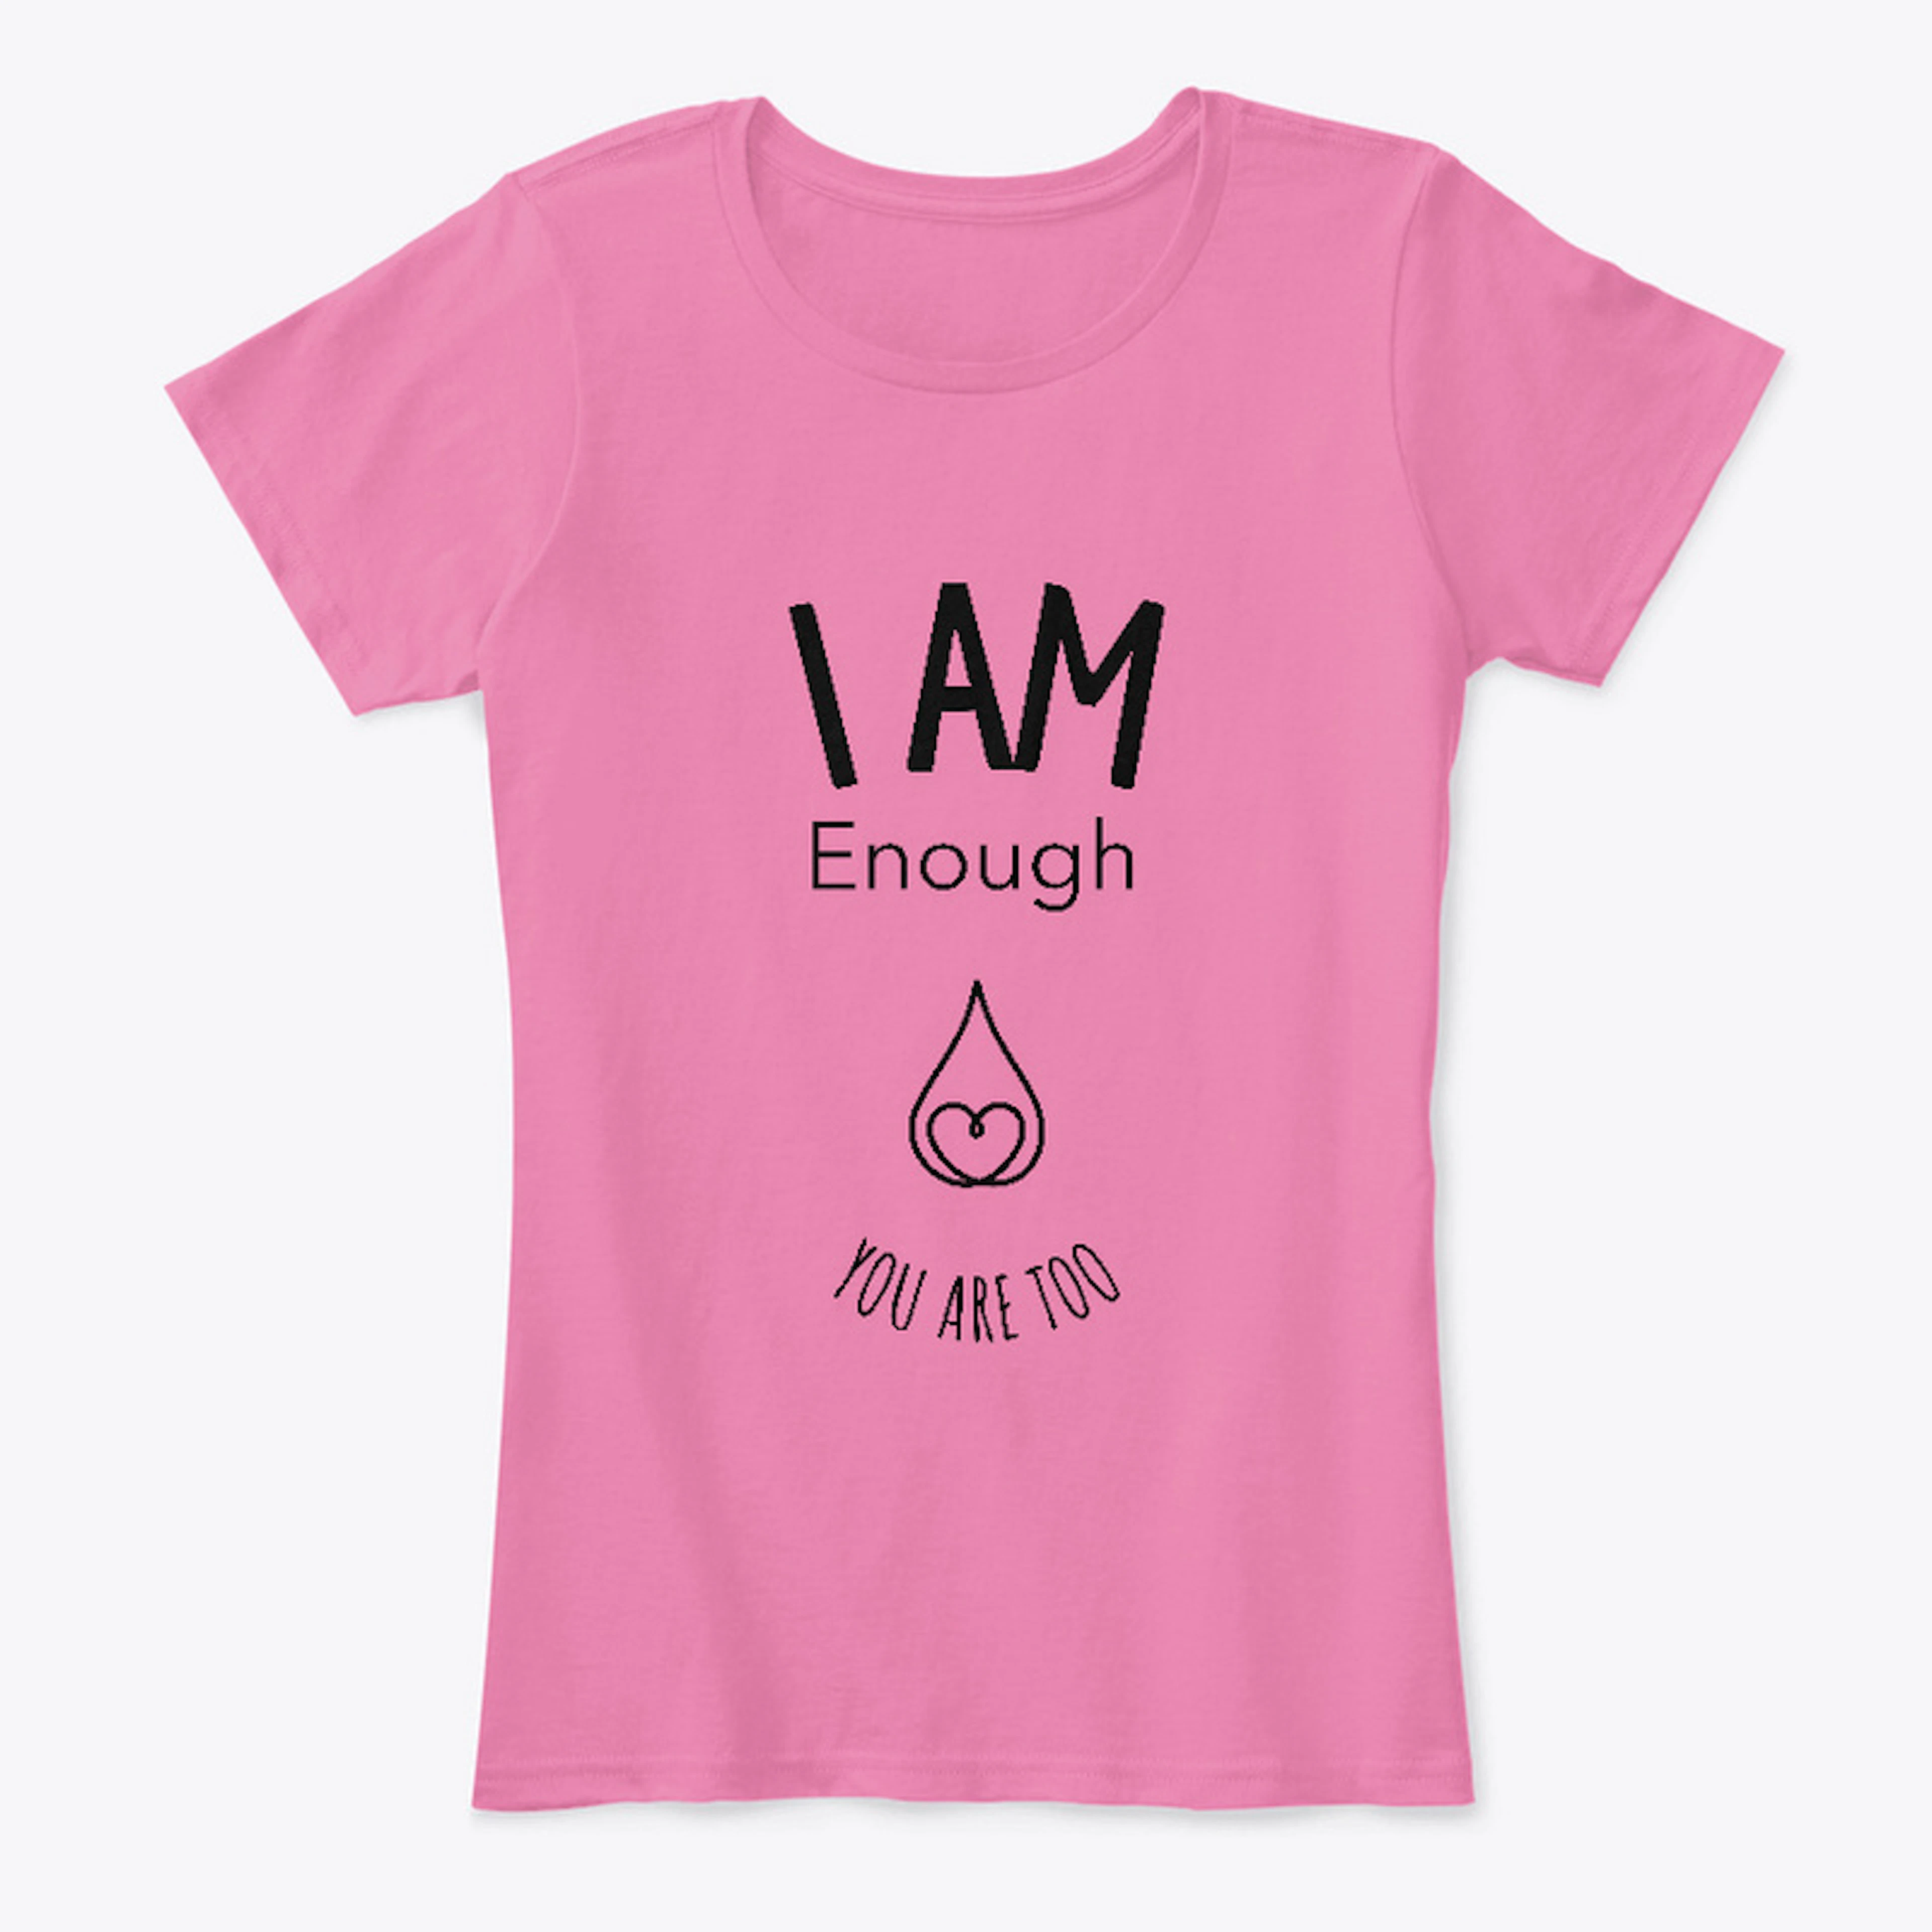 I AM Enough Women’s T-Shirt  